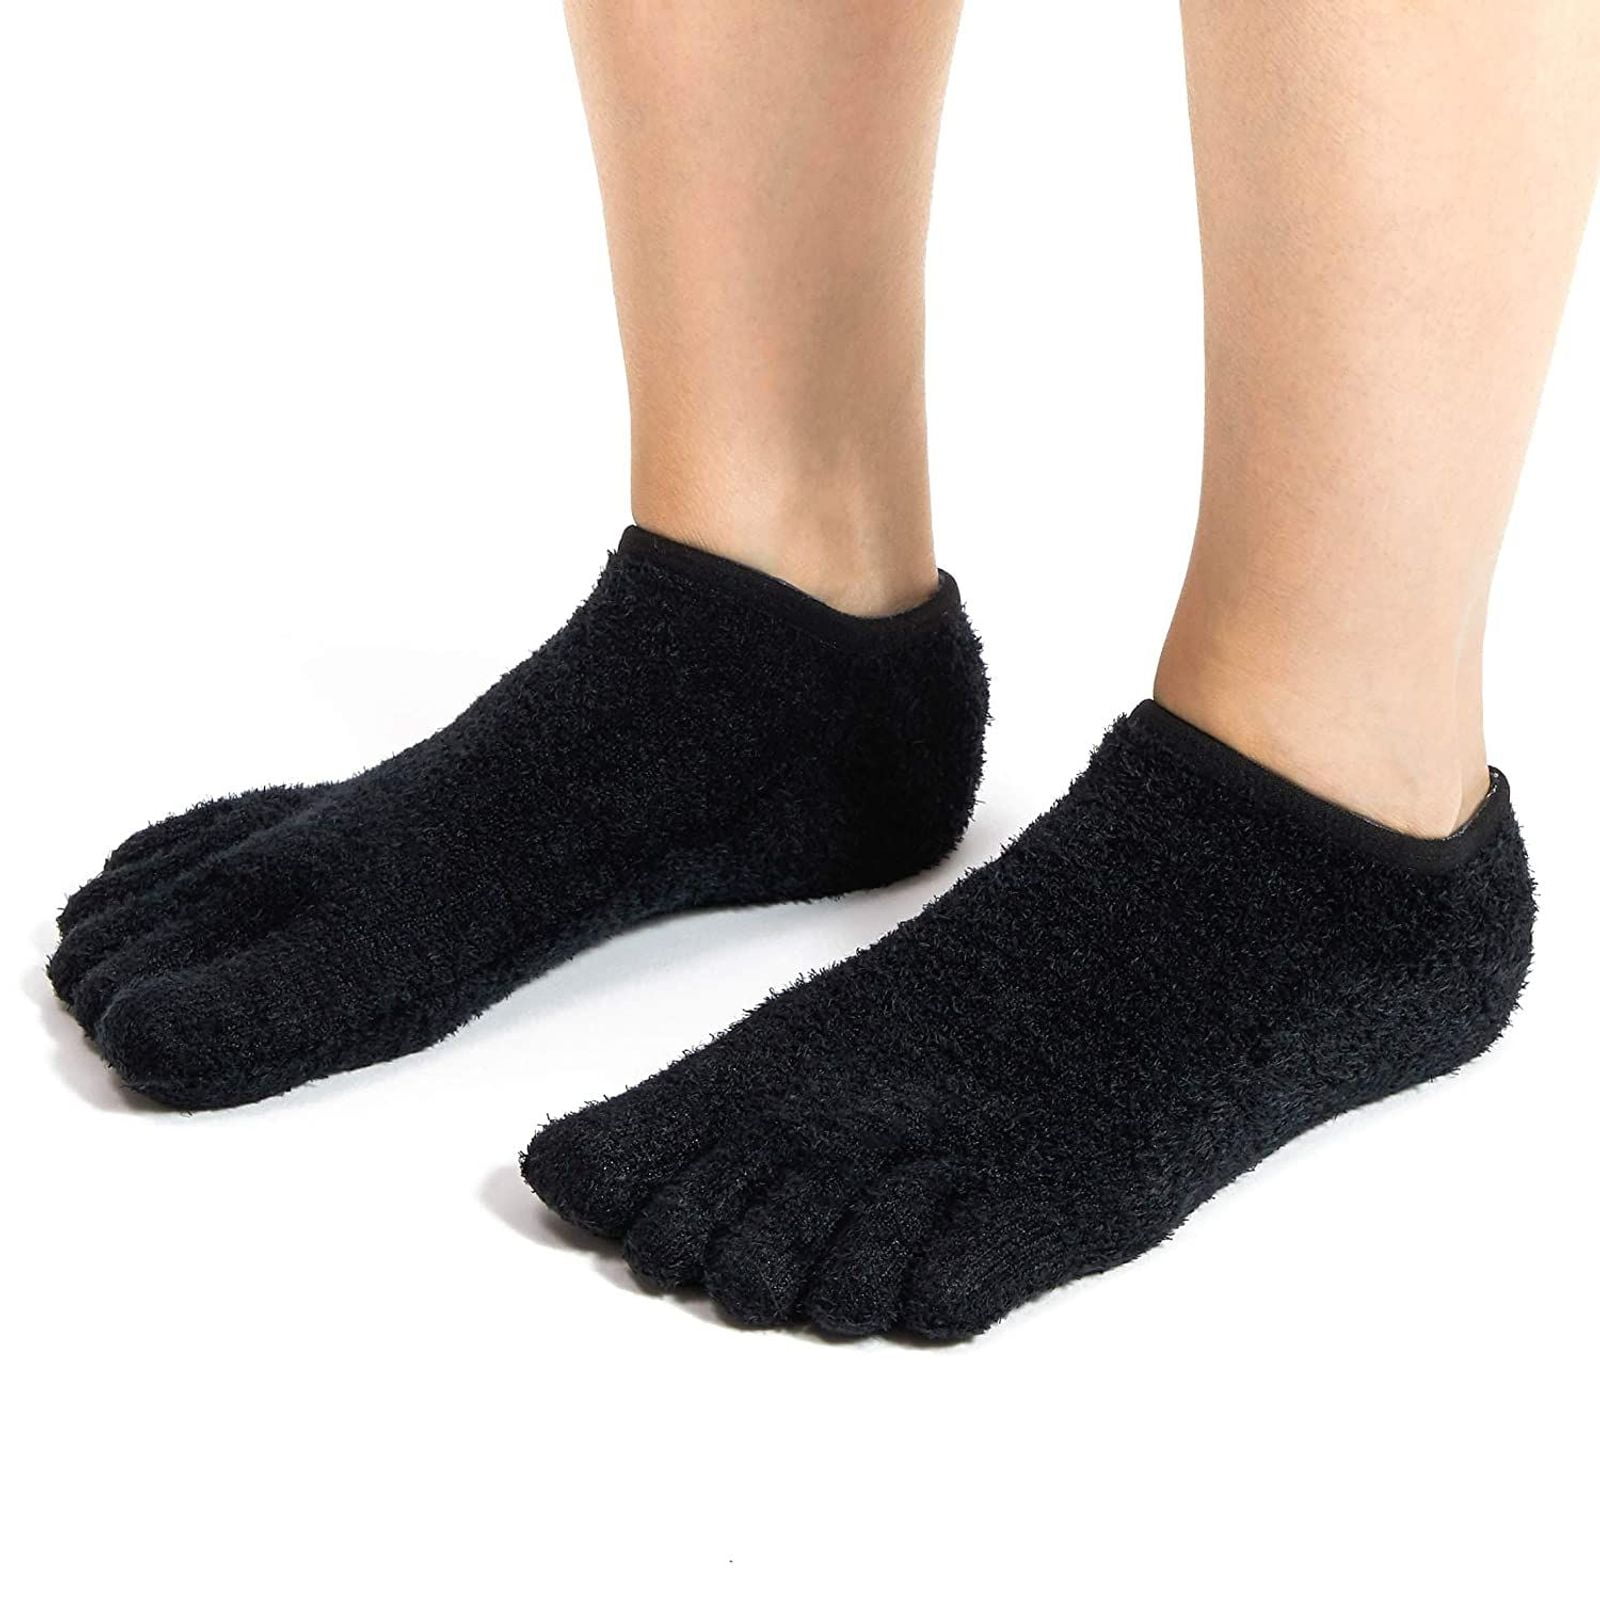 Black 5-Toe Gel Socks (US 7-10, 2 Pairs) - Walmart.com